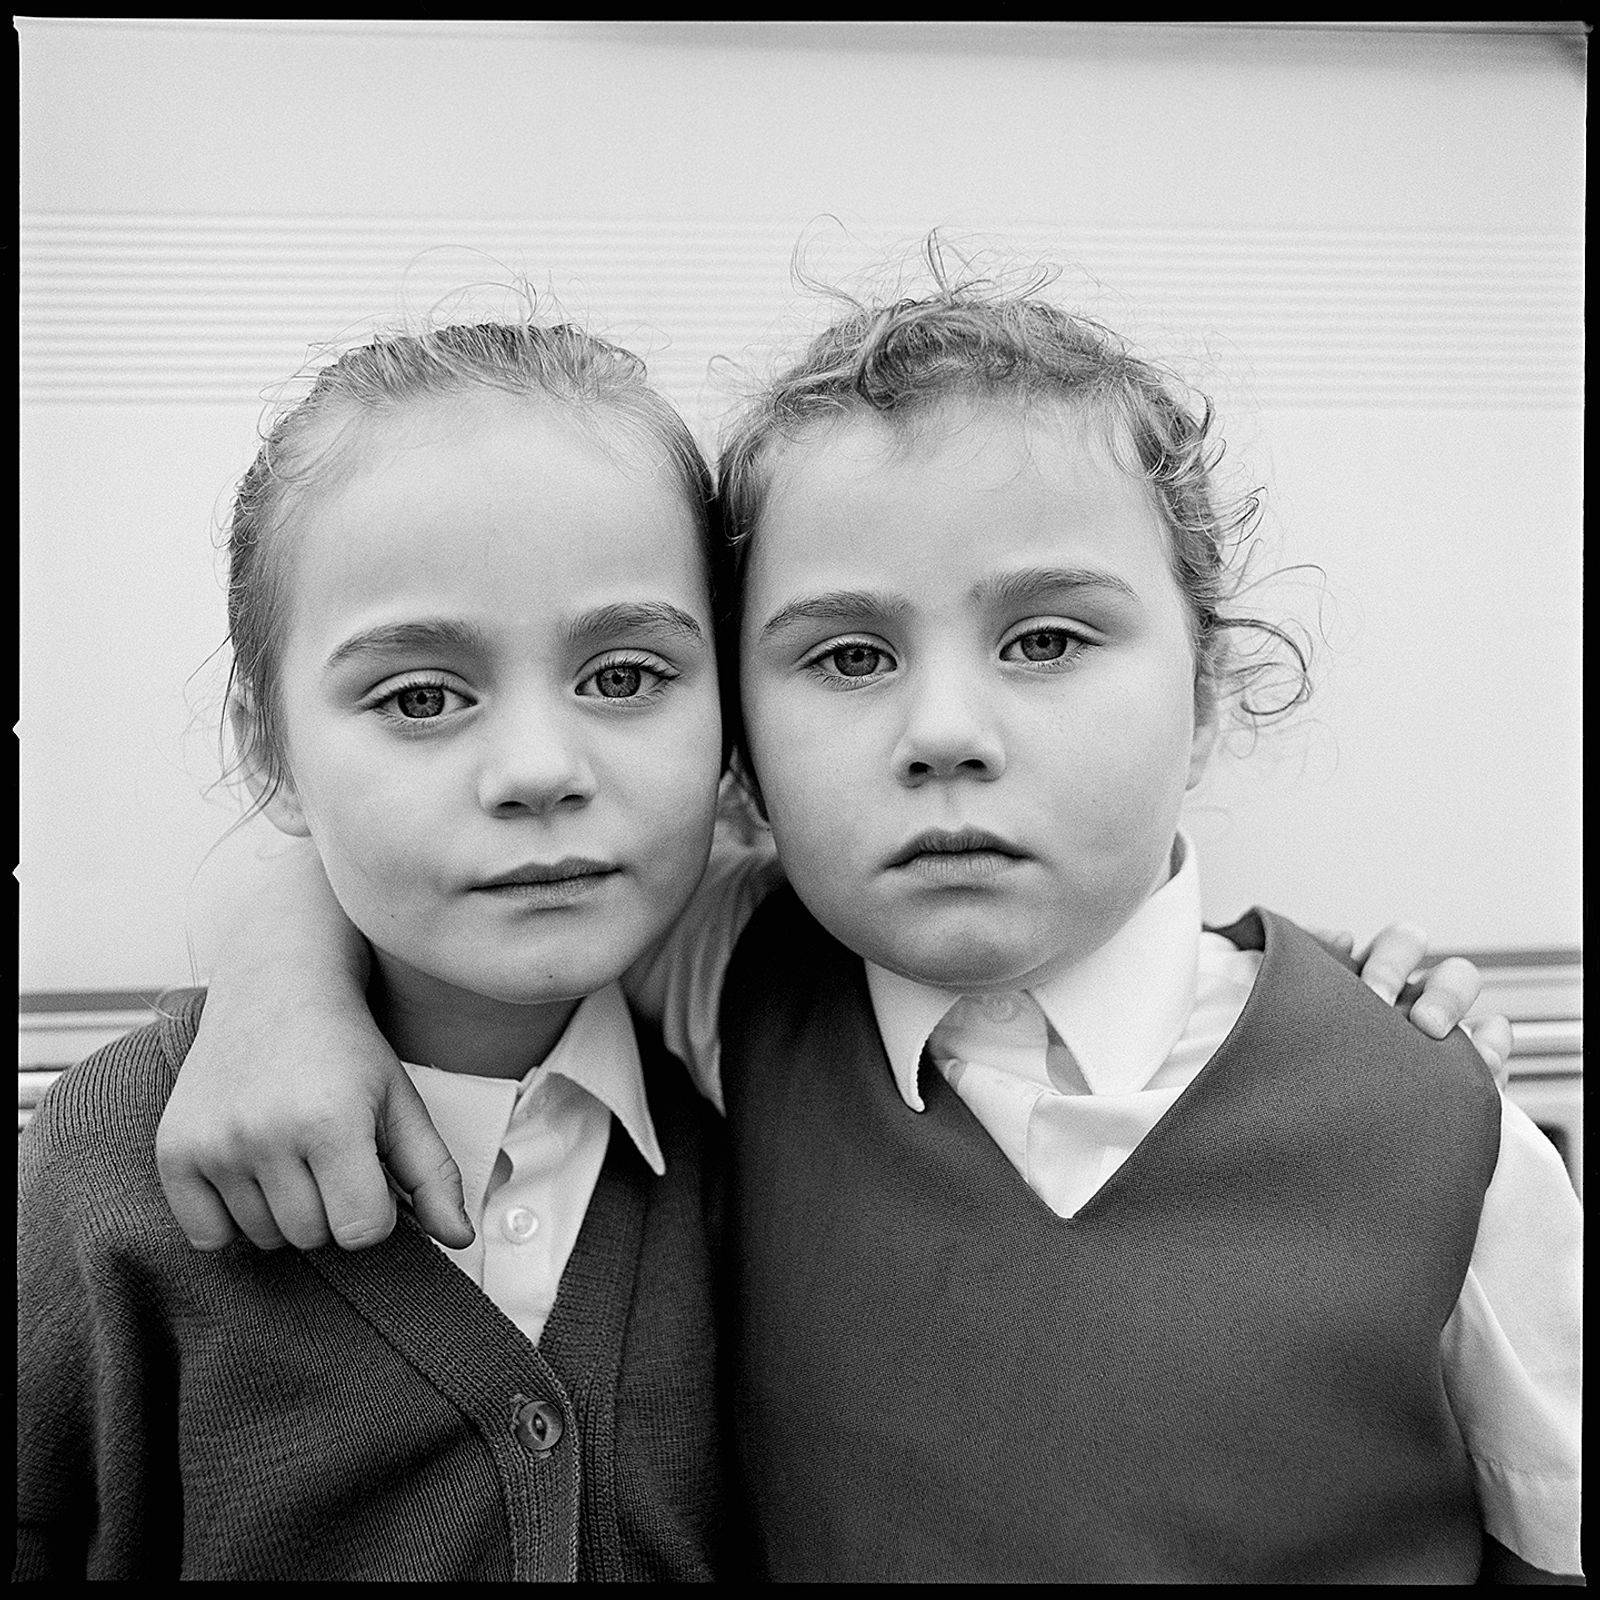 © Joseph-Philippe Bevillard - Indiana and Christina after school, Limerick, Ireland 2017